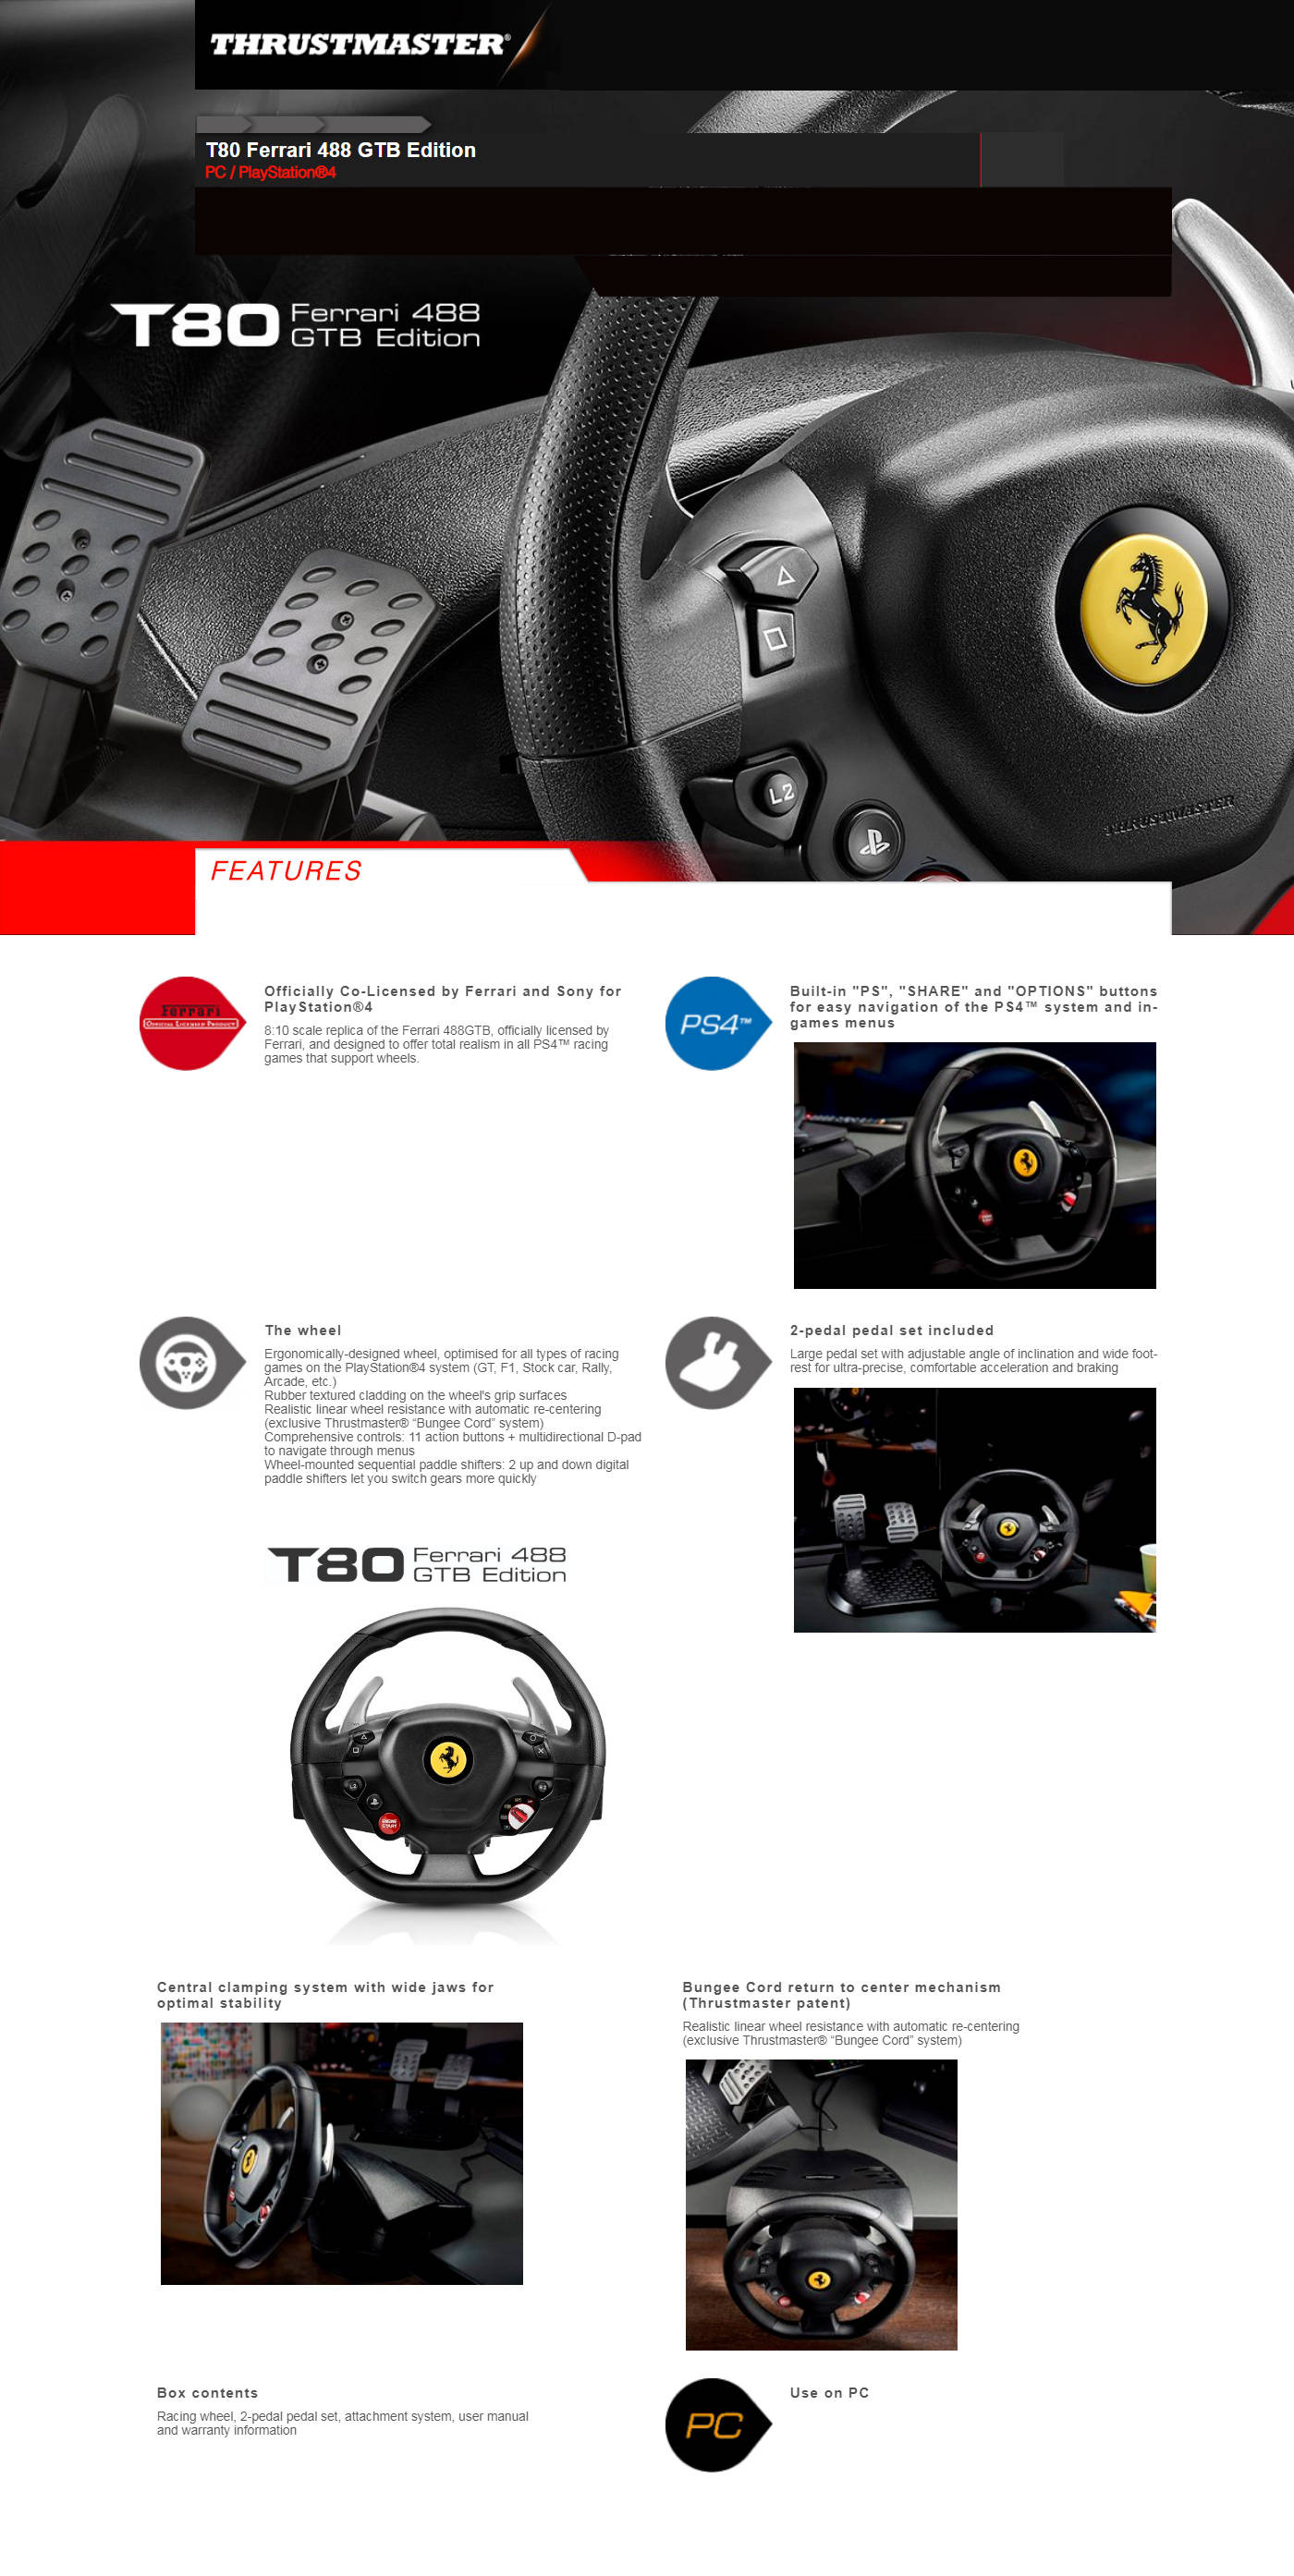 Buy Online Thrustmaster T80 Ferrari 488 GTB Edition - PS4 PC Racing Wheel